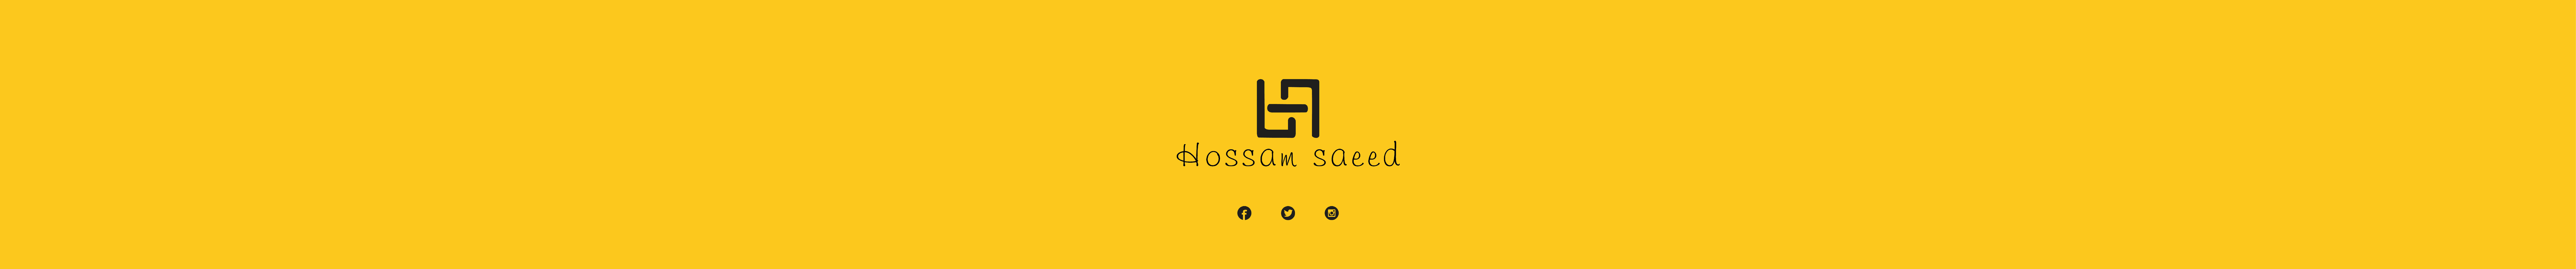 Profielbanner van Hossam saeed